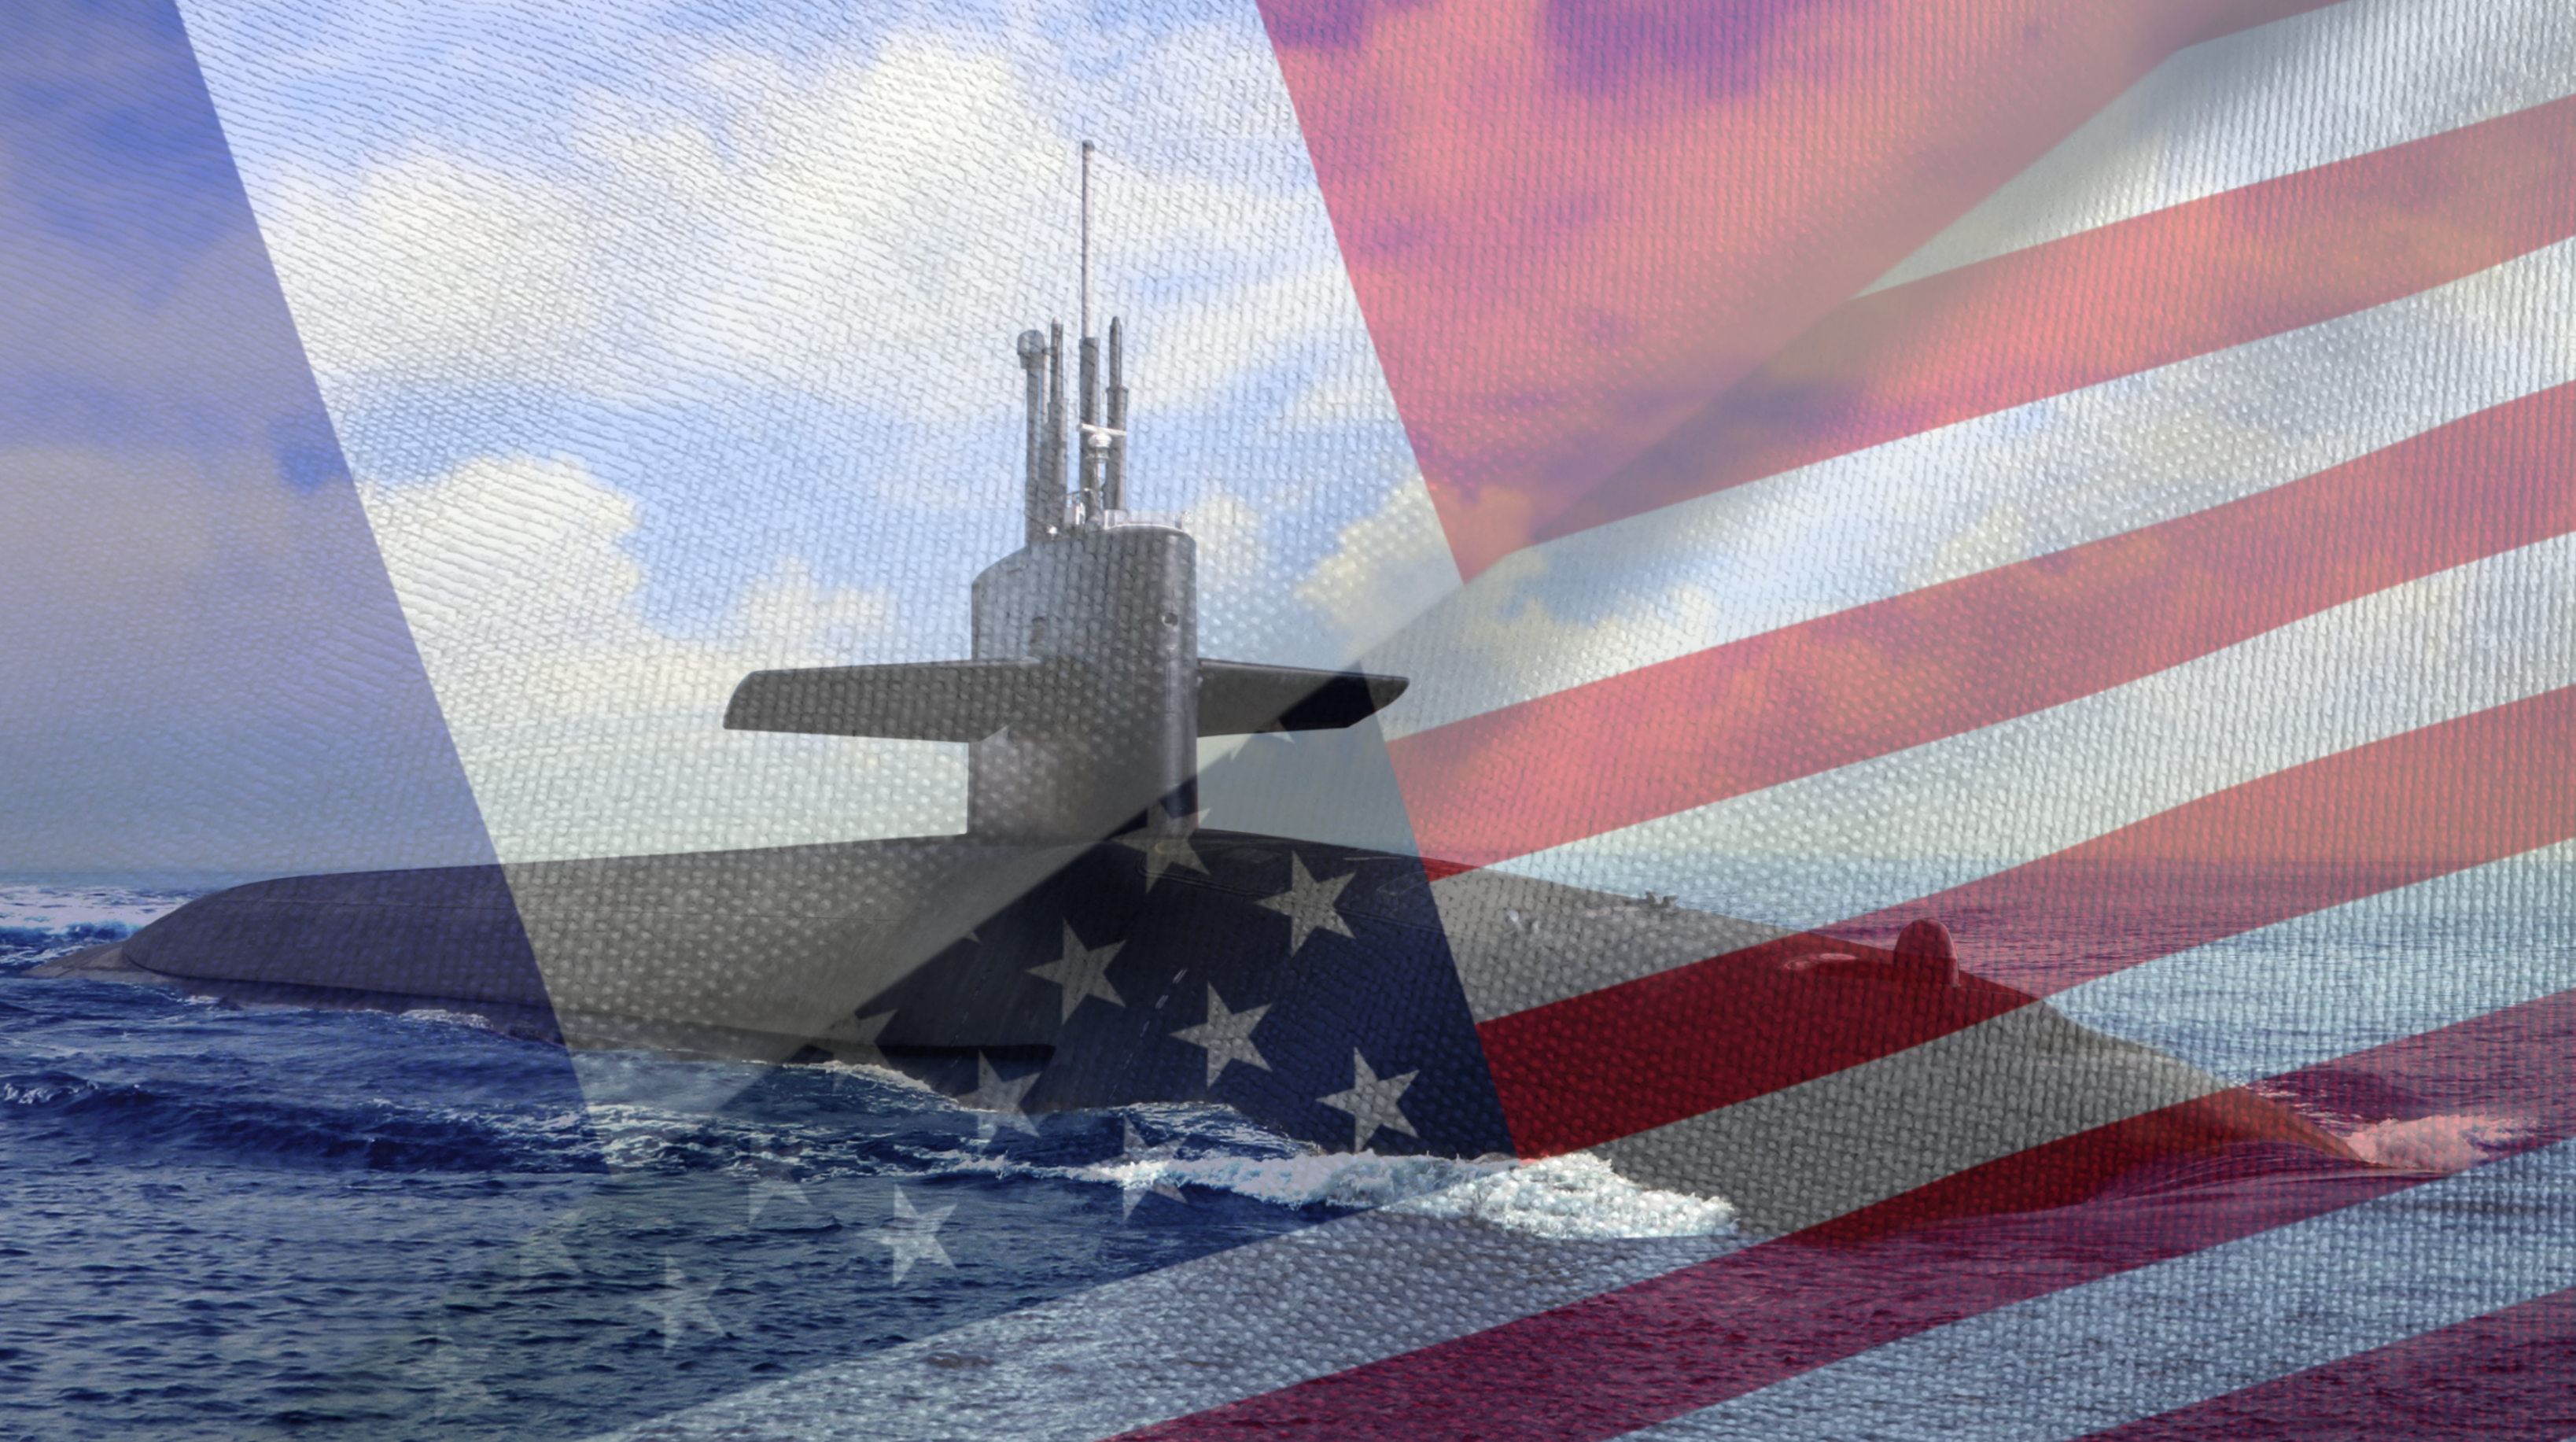 The submarine affair: the American attitude under the cultural microscope